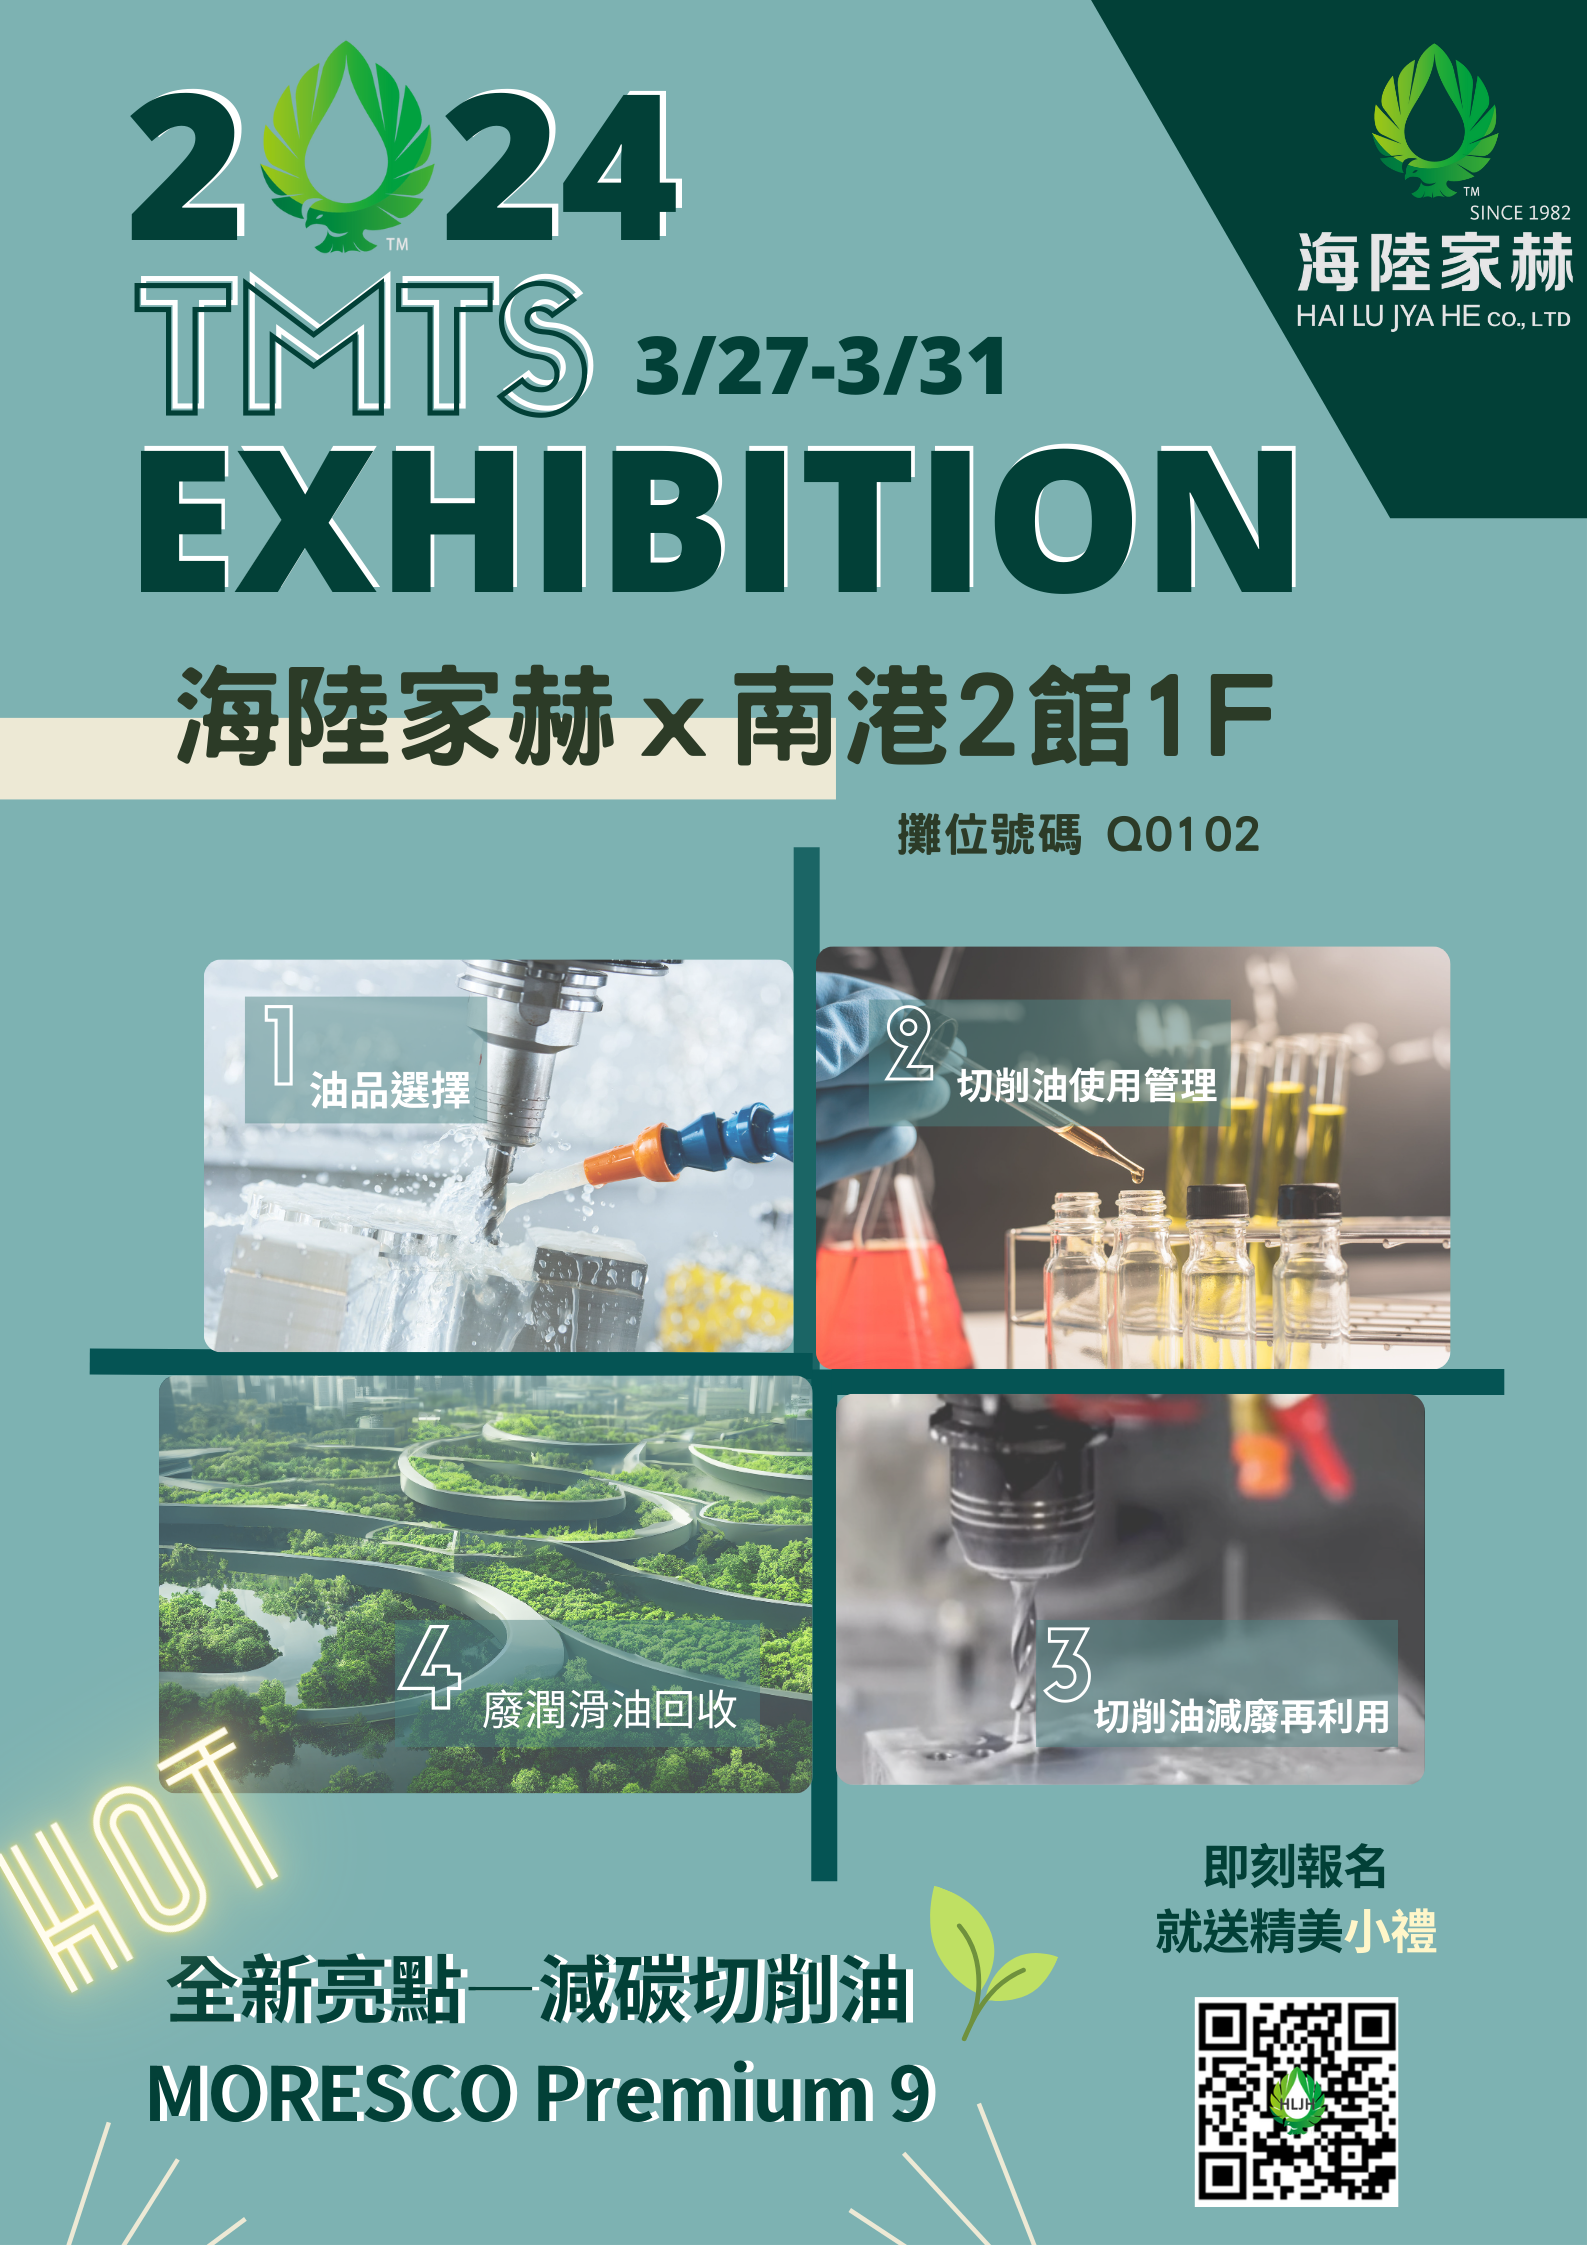 TMTS 2024 台北国际工具机展